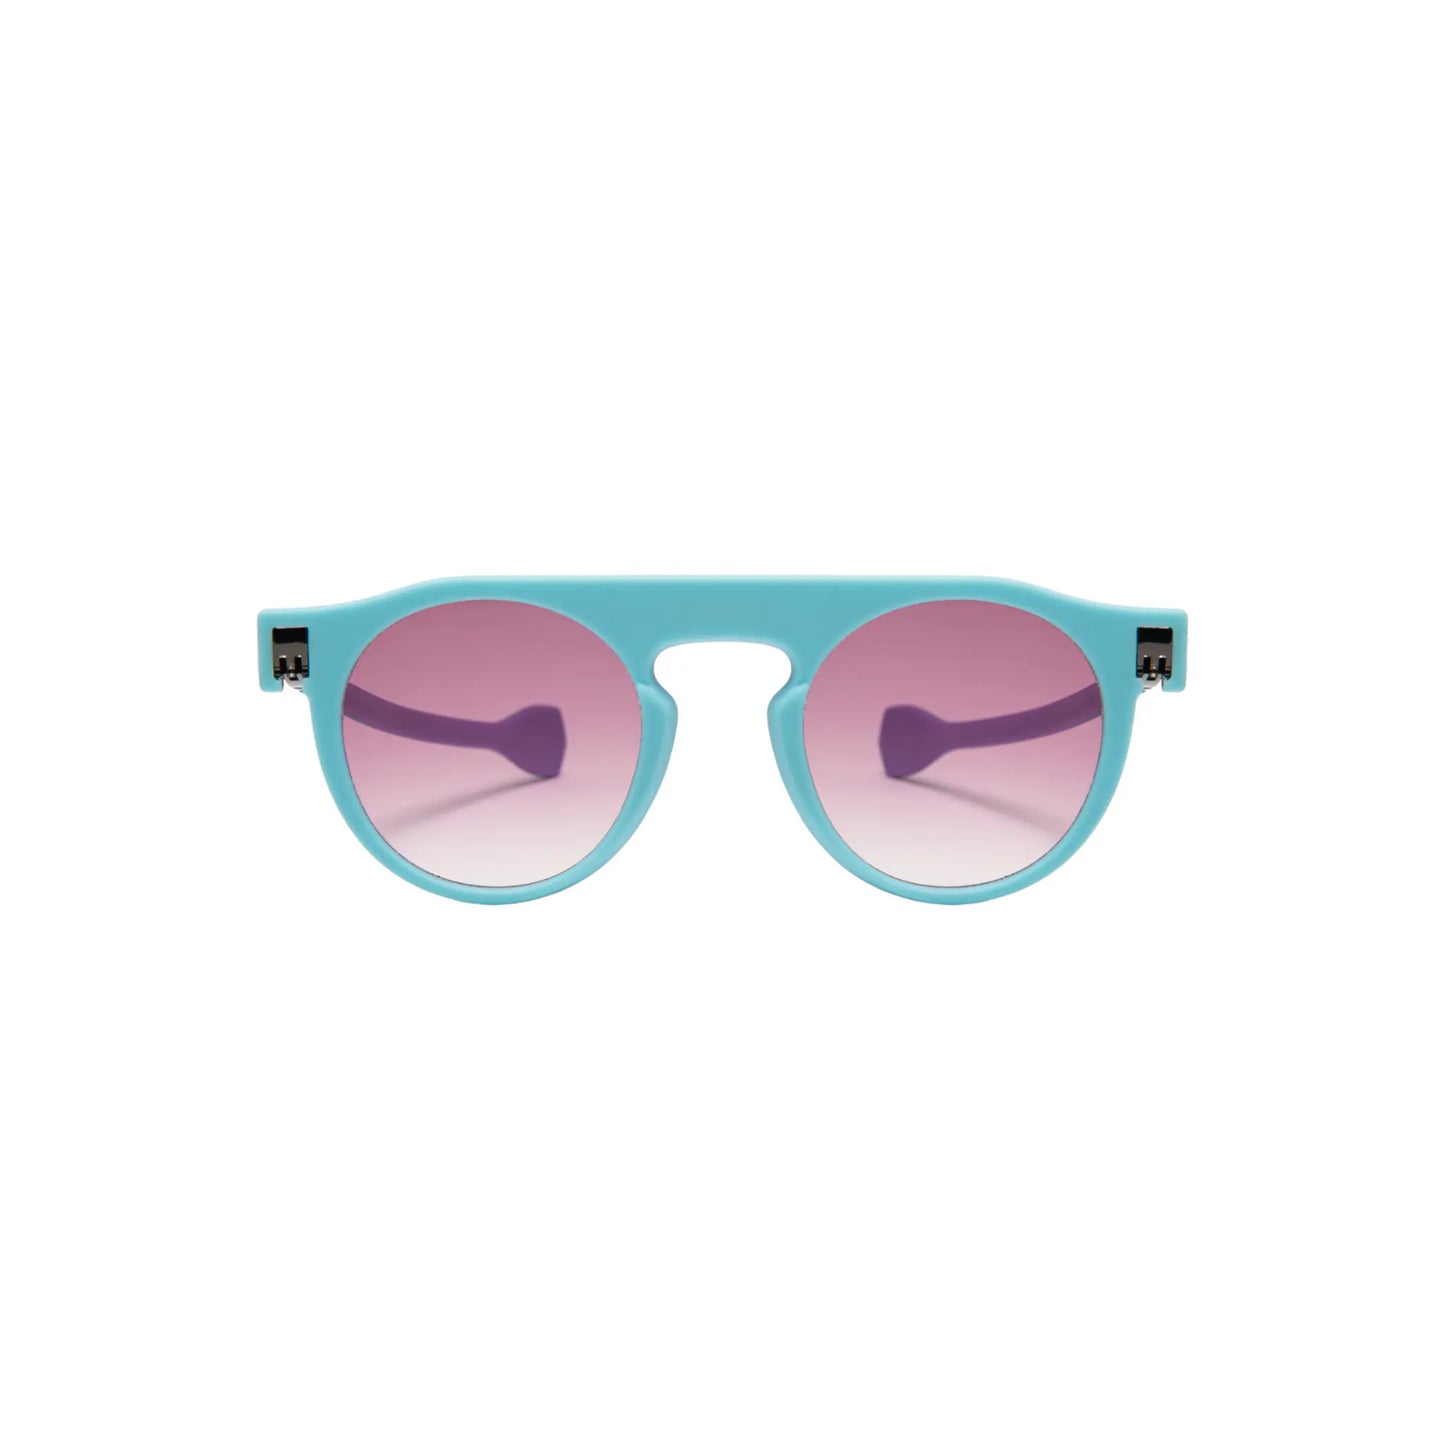 Reverso sunglasses violet & tiffany blue reversible & ultra light front view 1